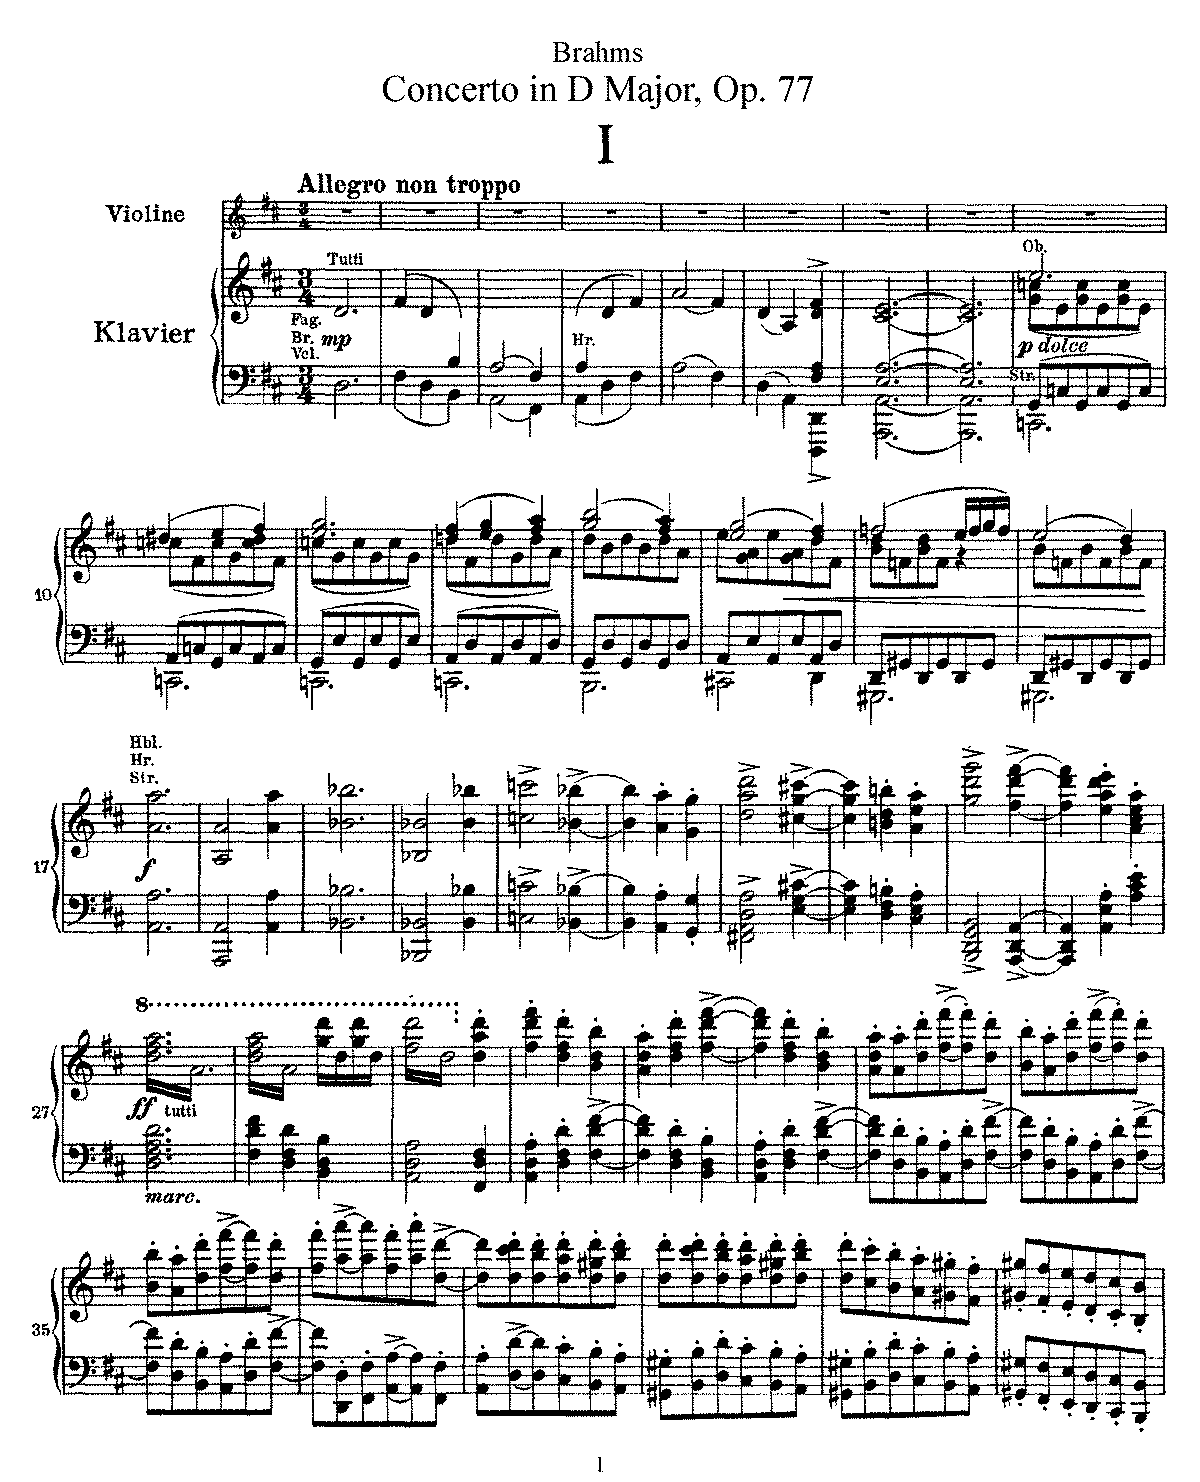 Концерт для скрипки ре мажор